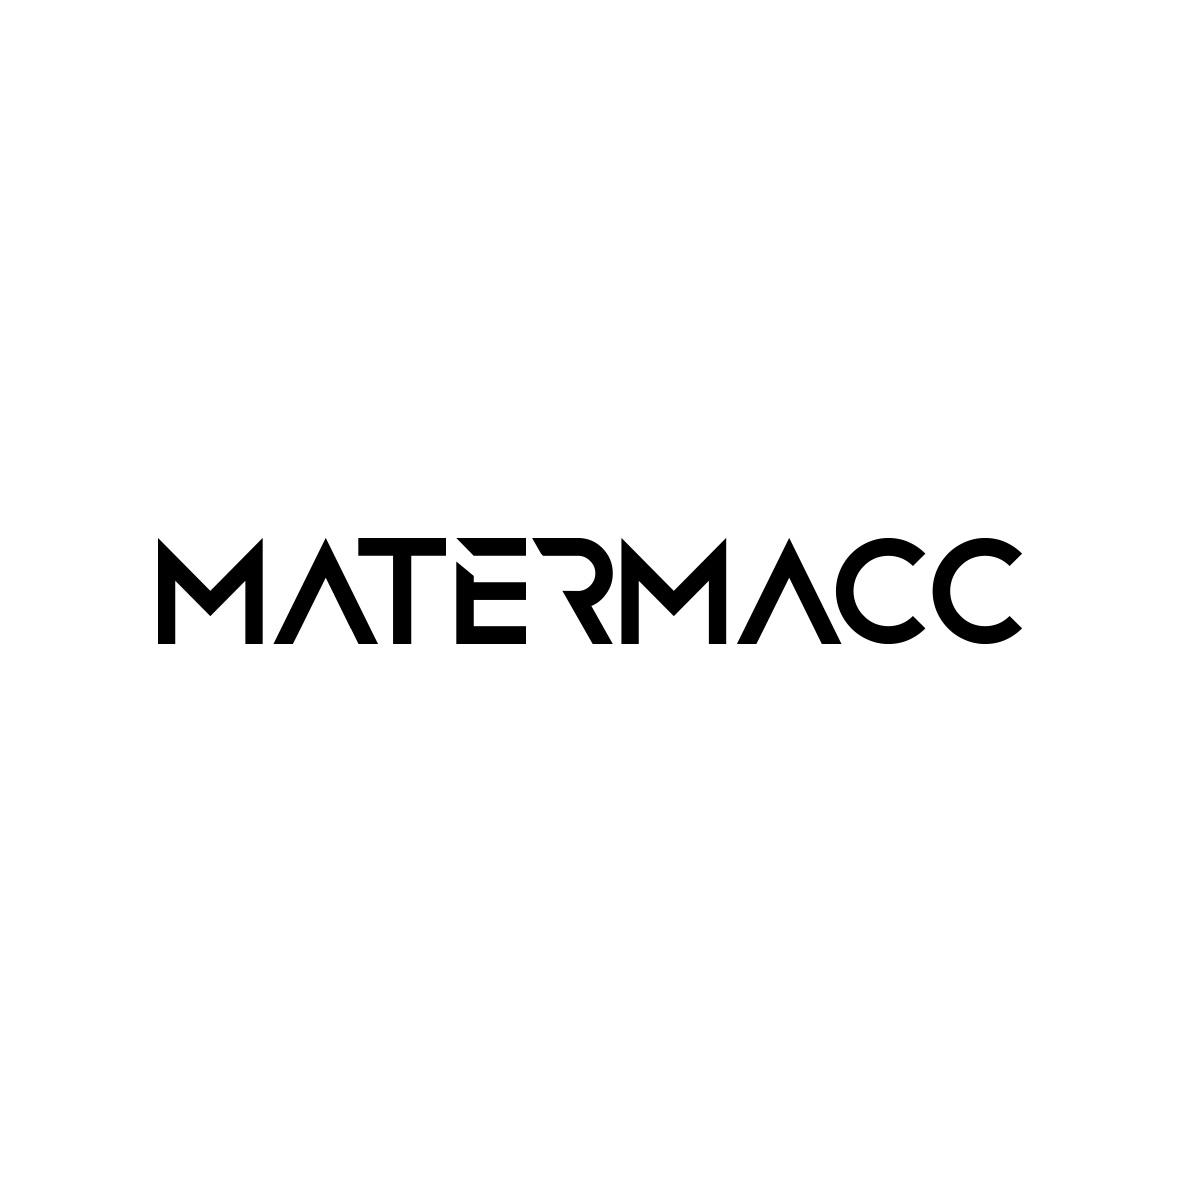 MATERMACC